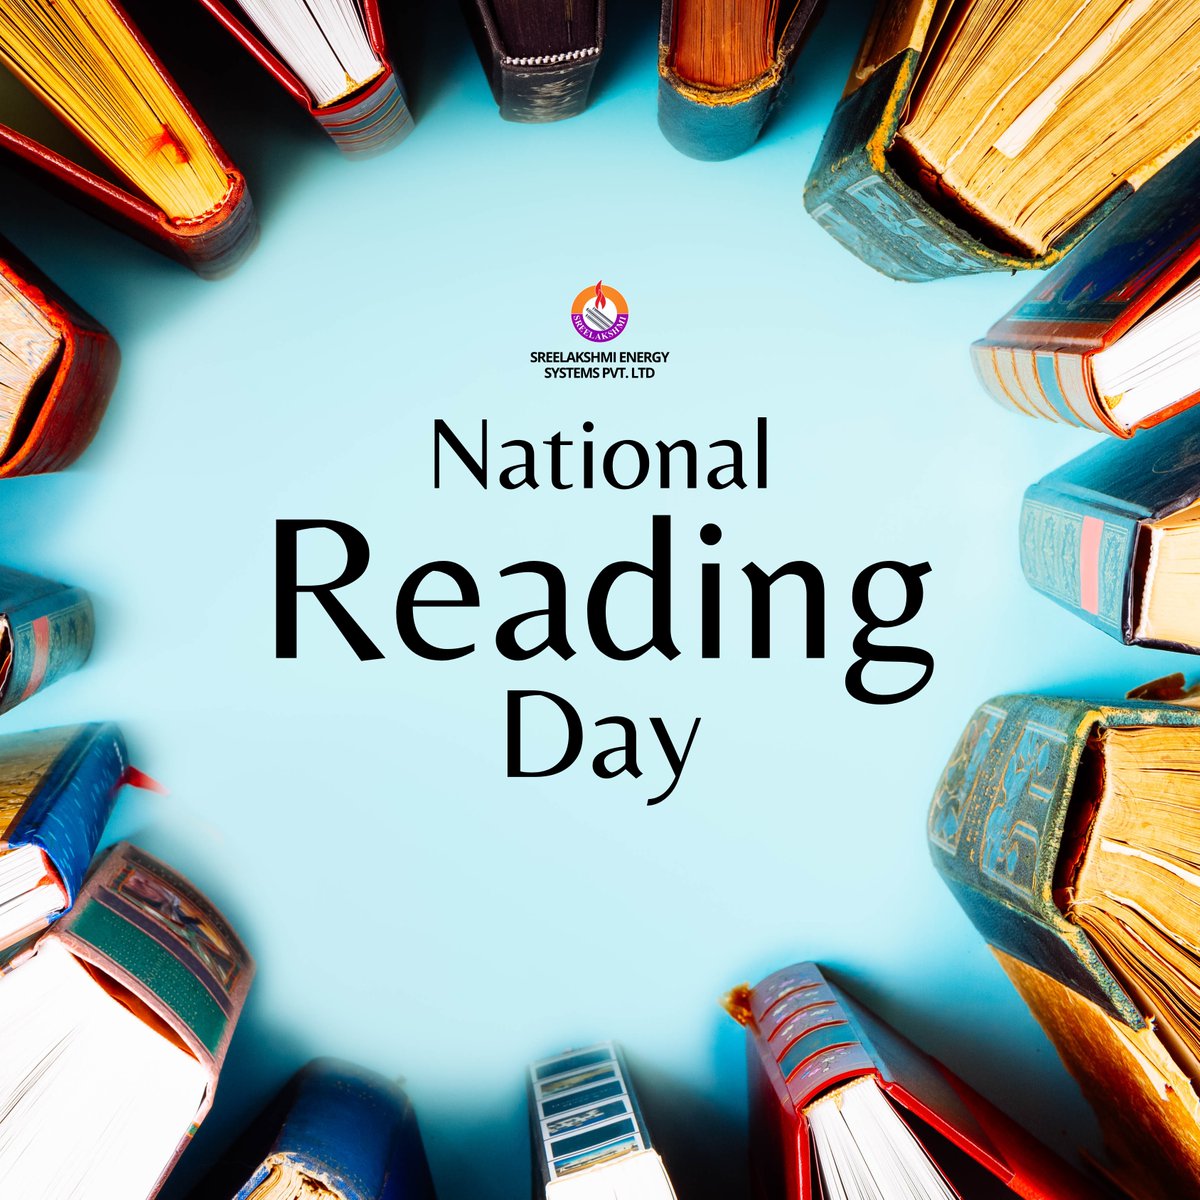 National Reading Day

#NationalReadingDay #book #reading #sreelakshmienergysystems